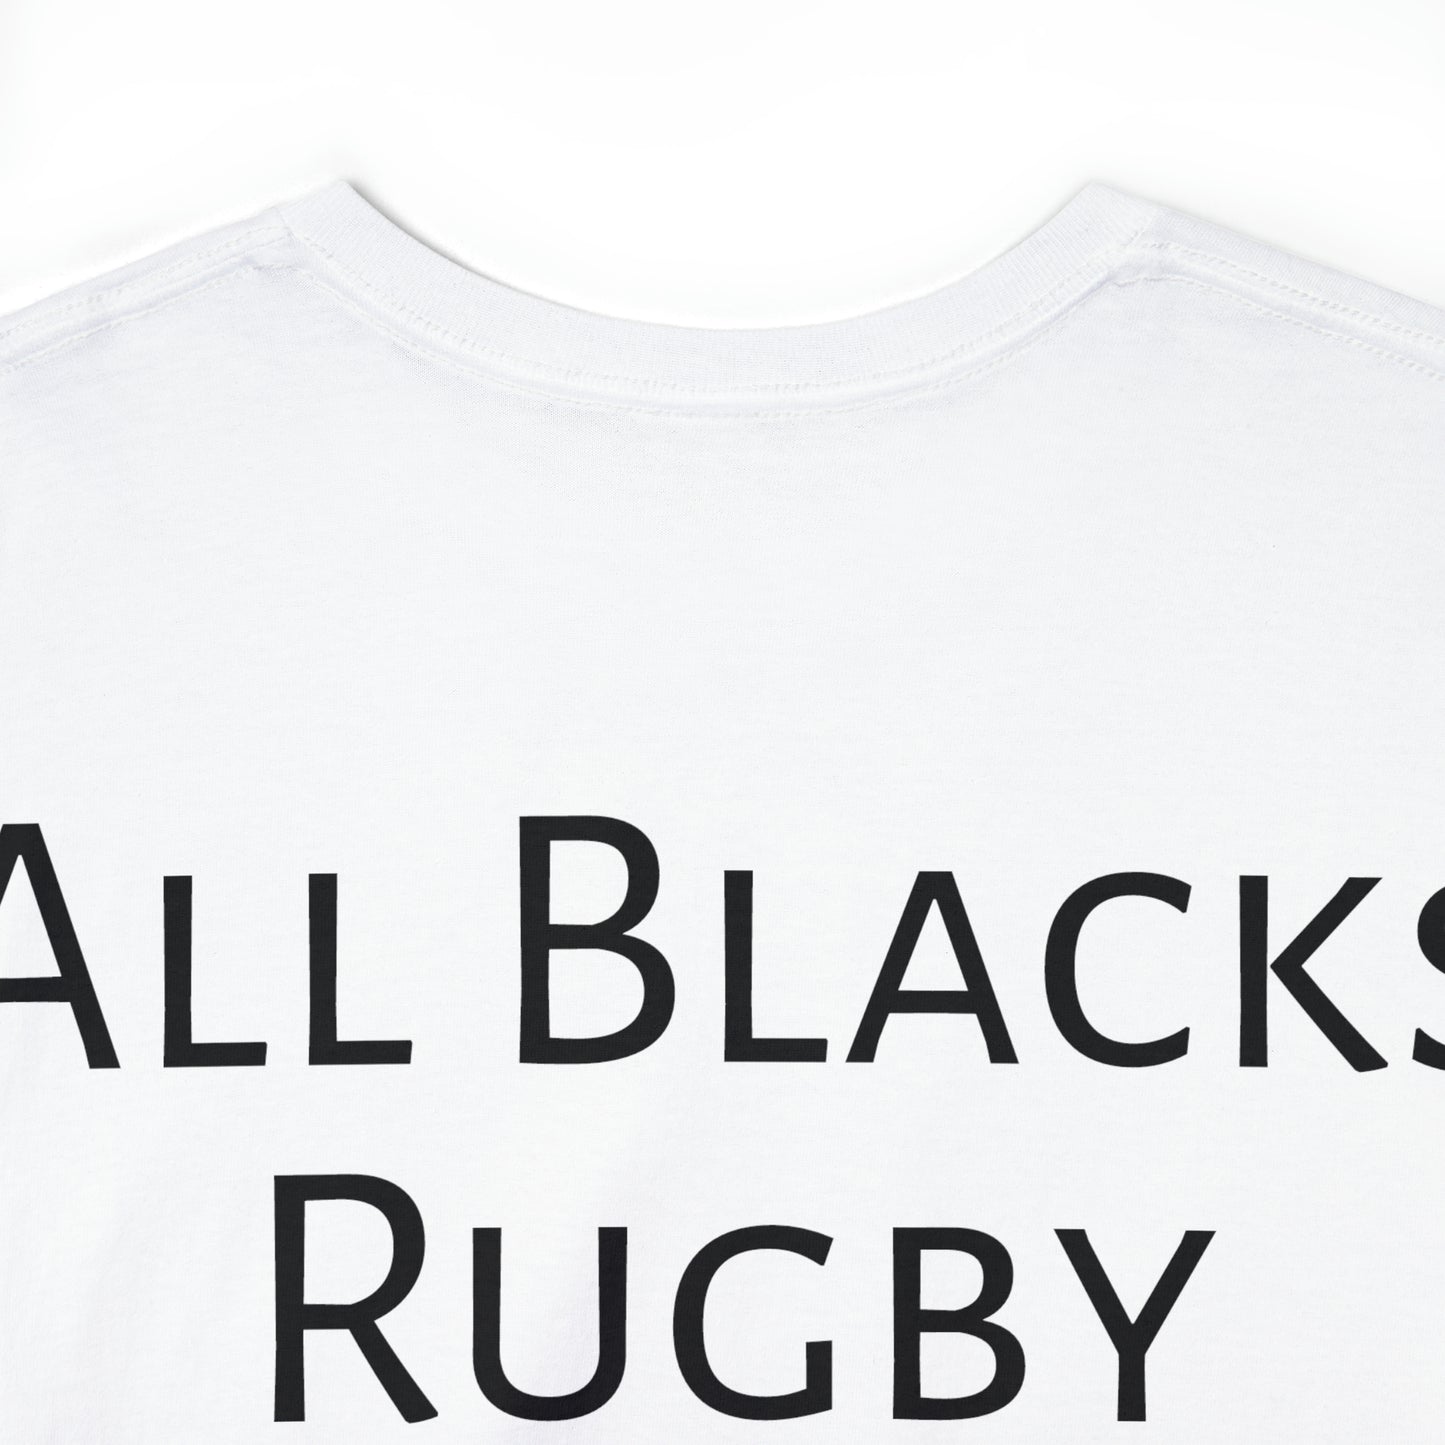 Ready All Blacks - light shirts